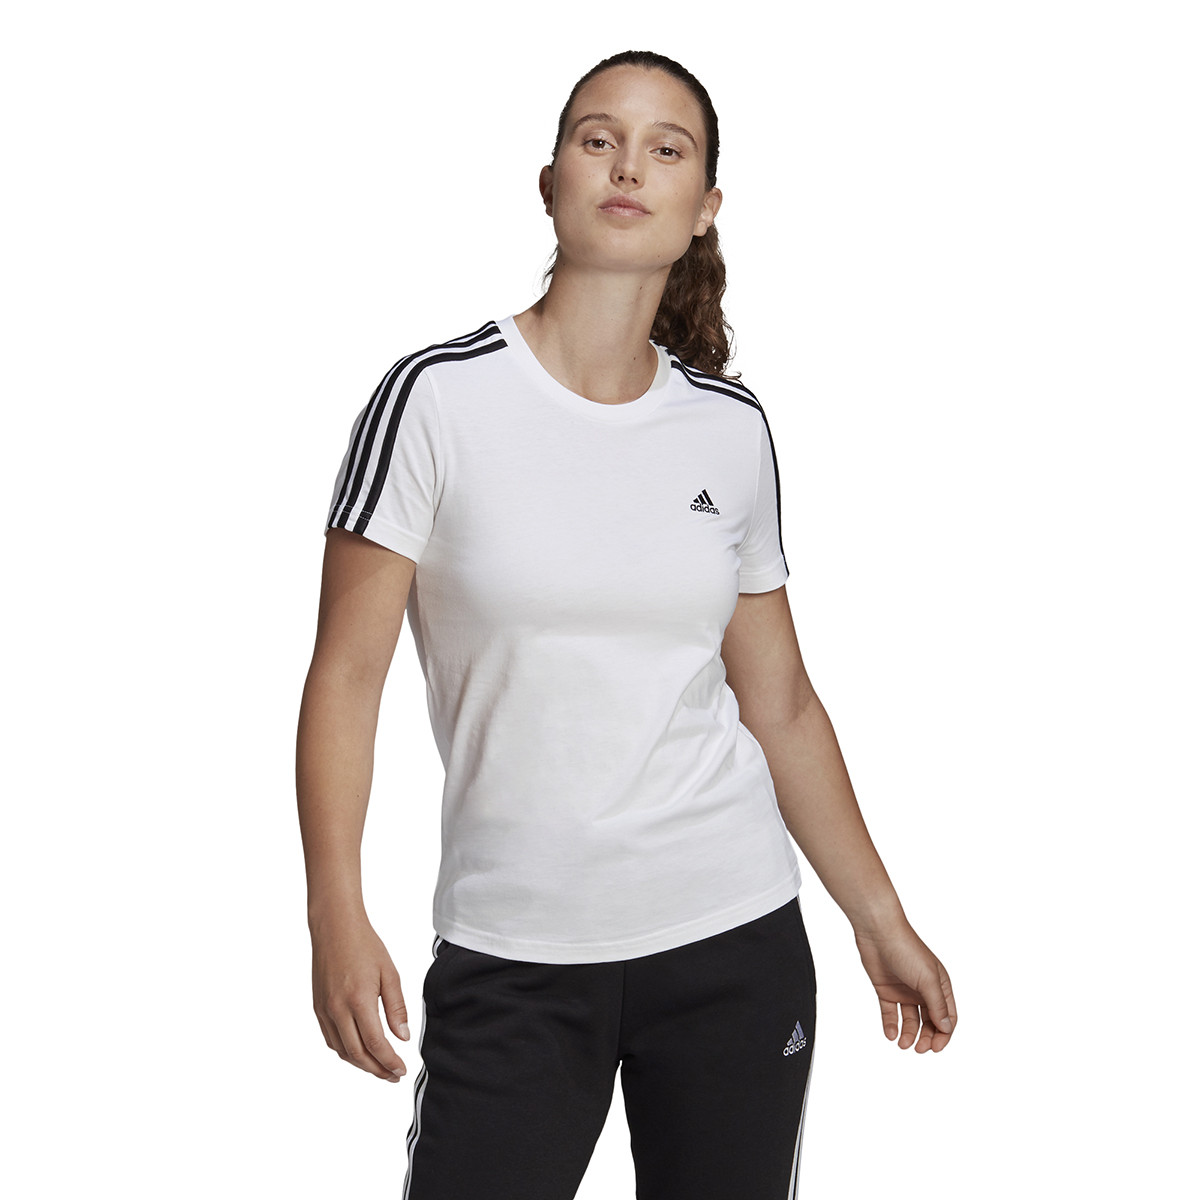 W 3S T  女式舒适休闲运动短袖T恤